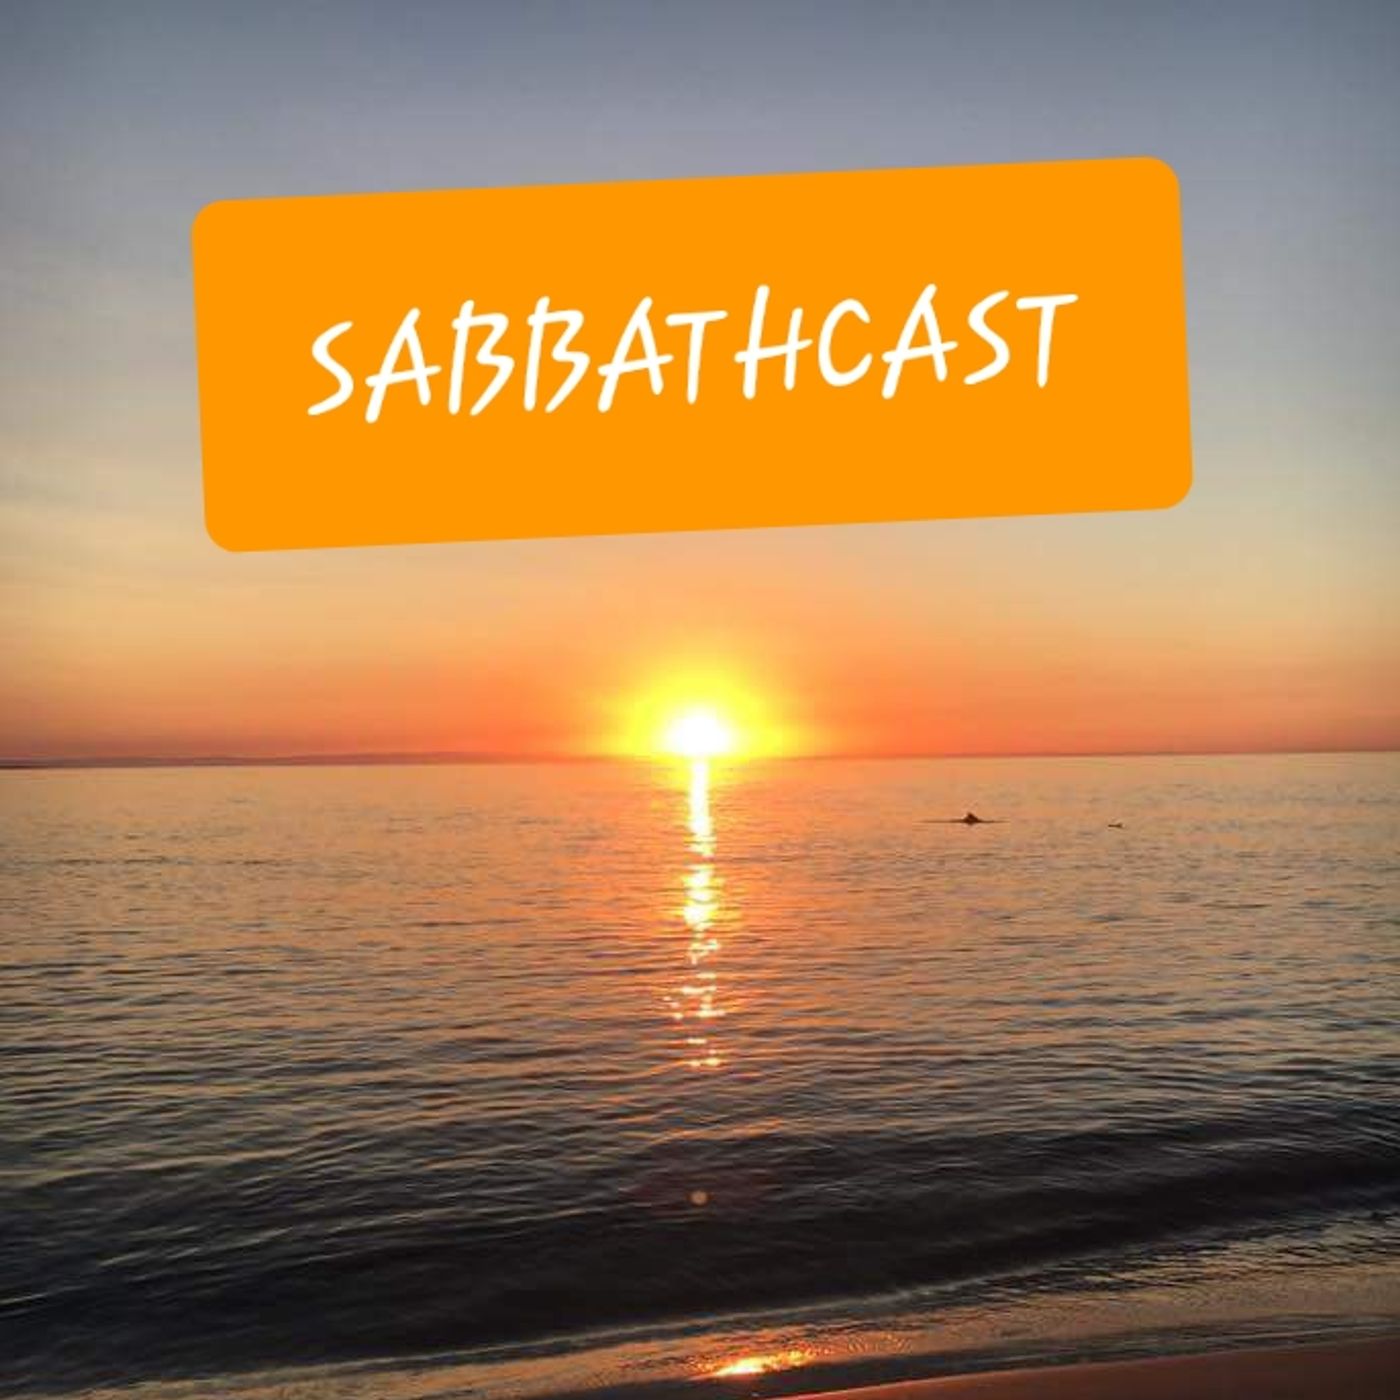 SabbathCast